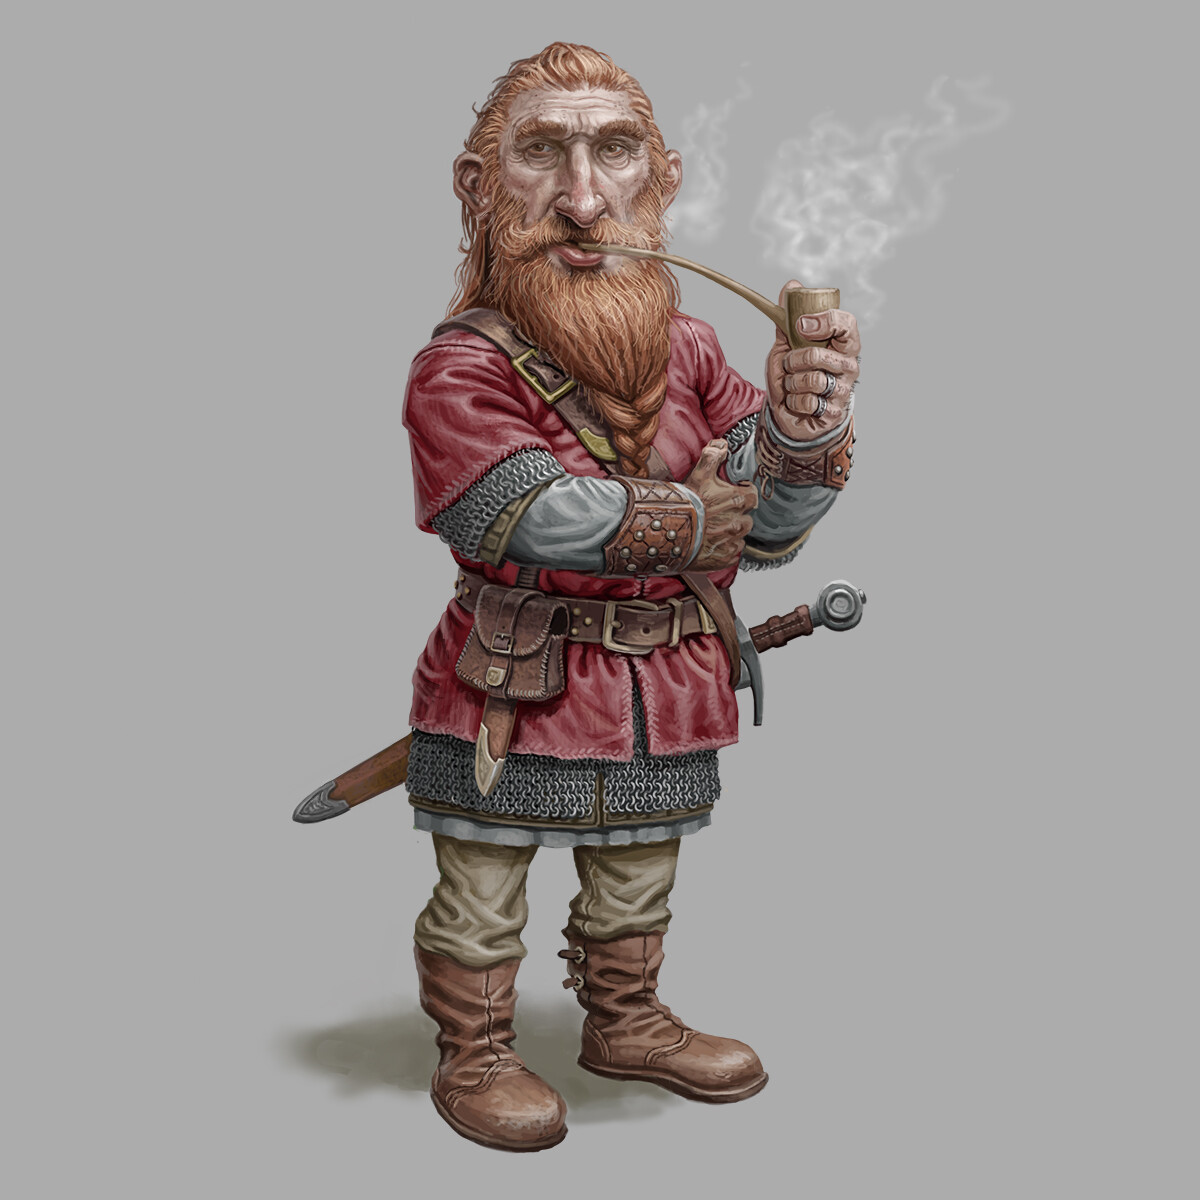 Dwarf Smoking a Pipe.